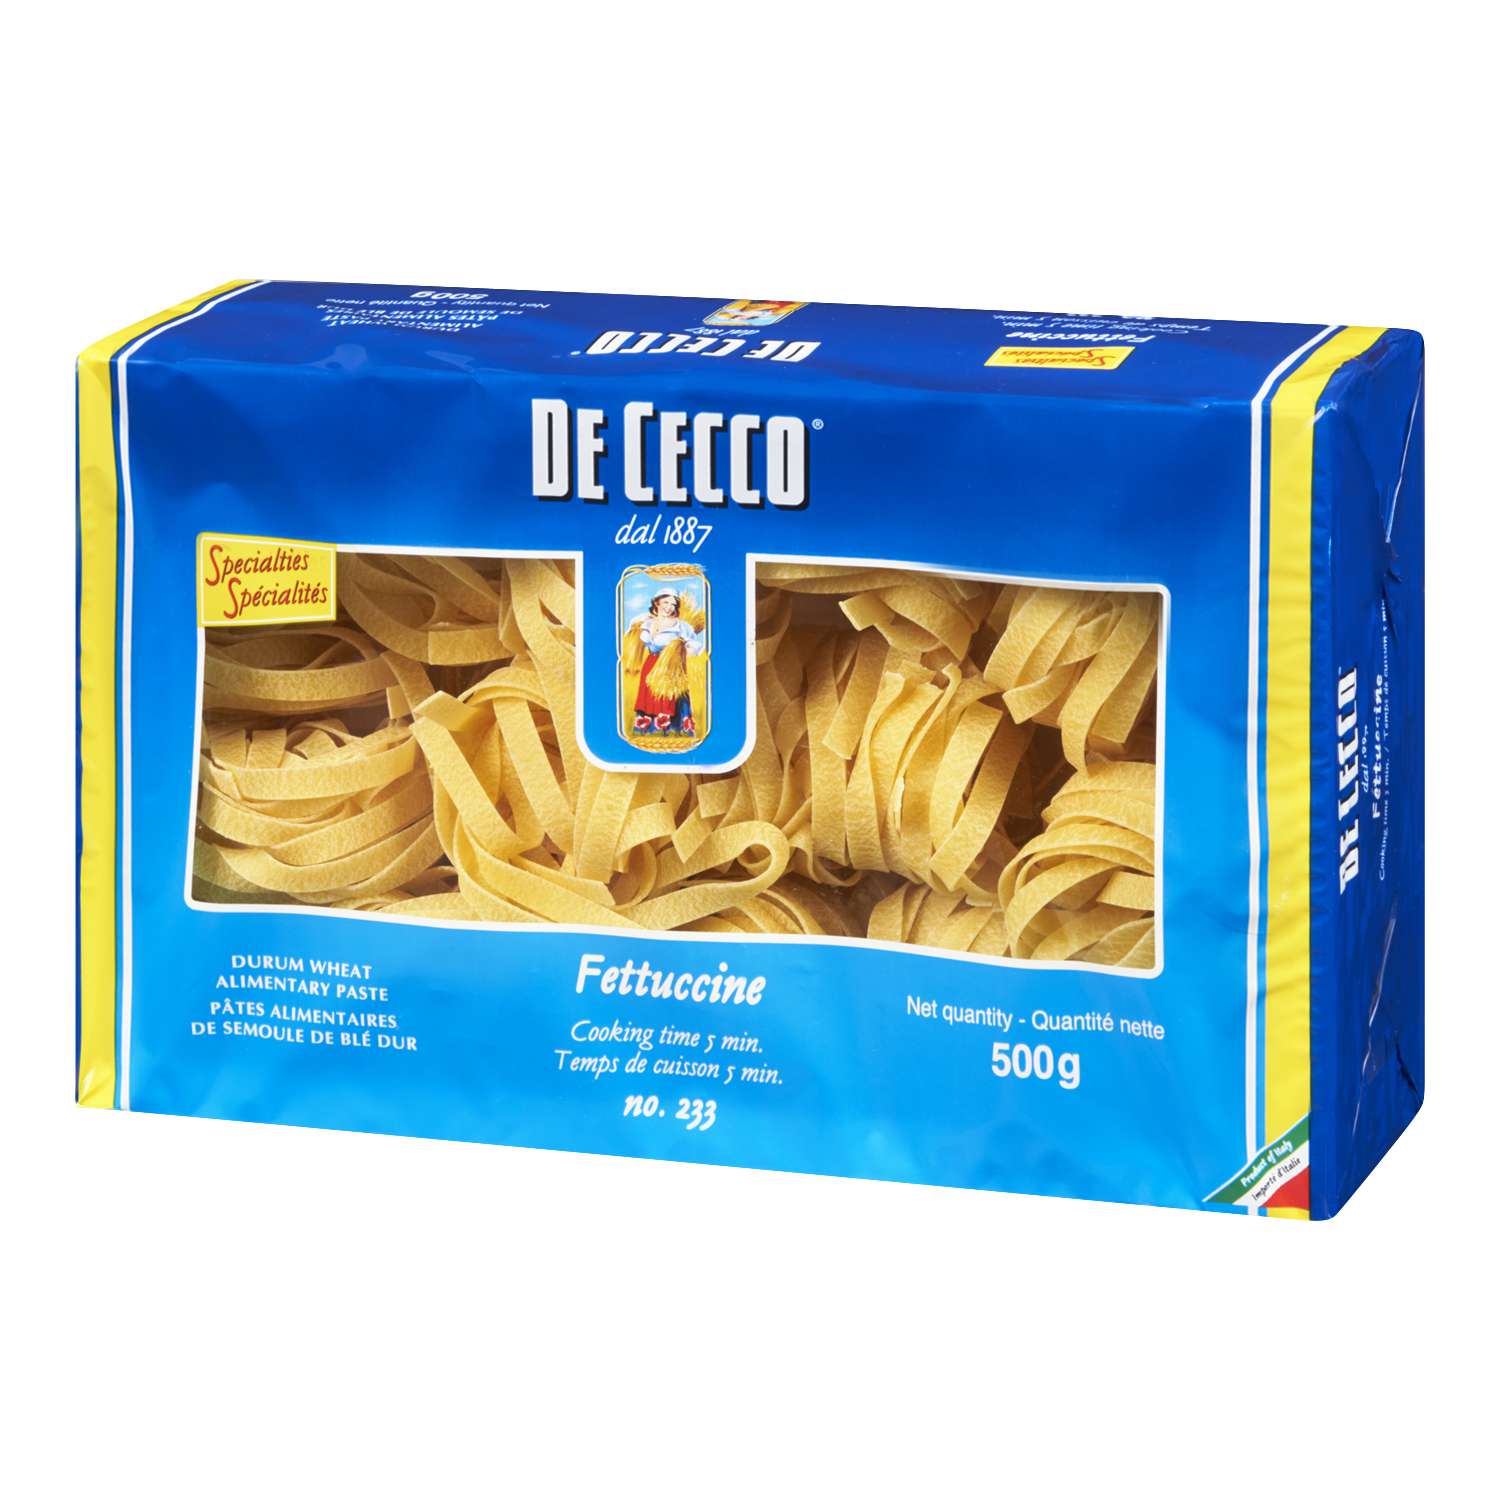 De Cecco Fettuccine plain pasta N233 500g